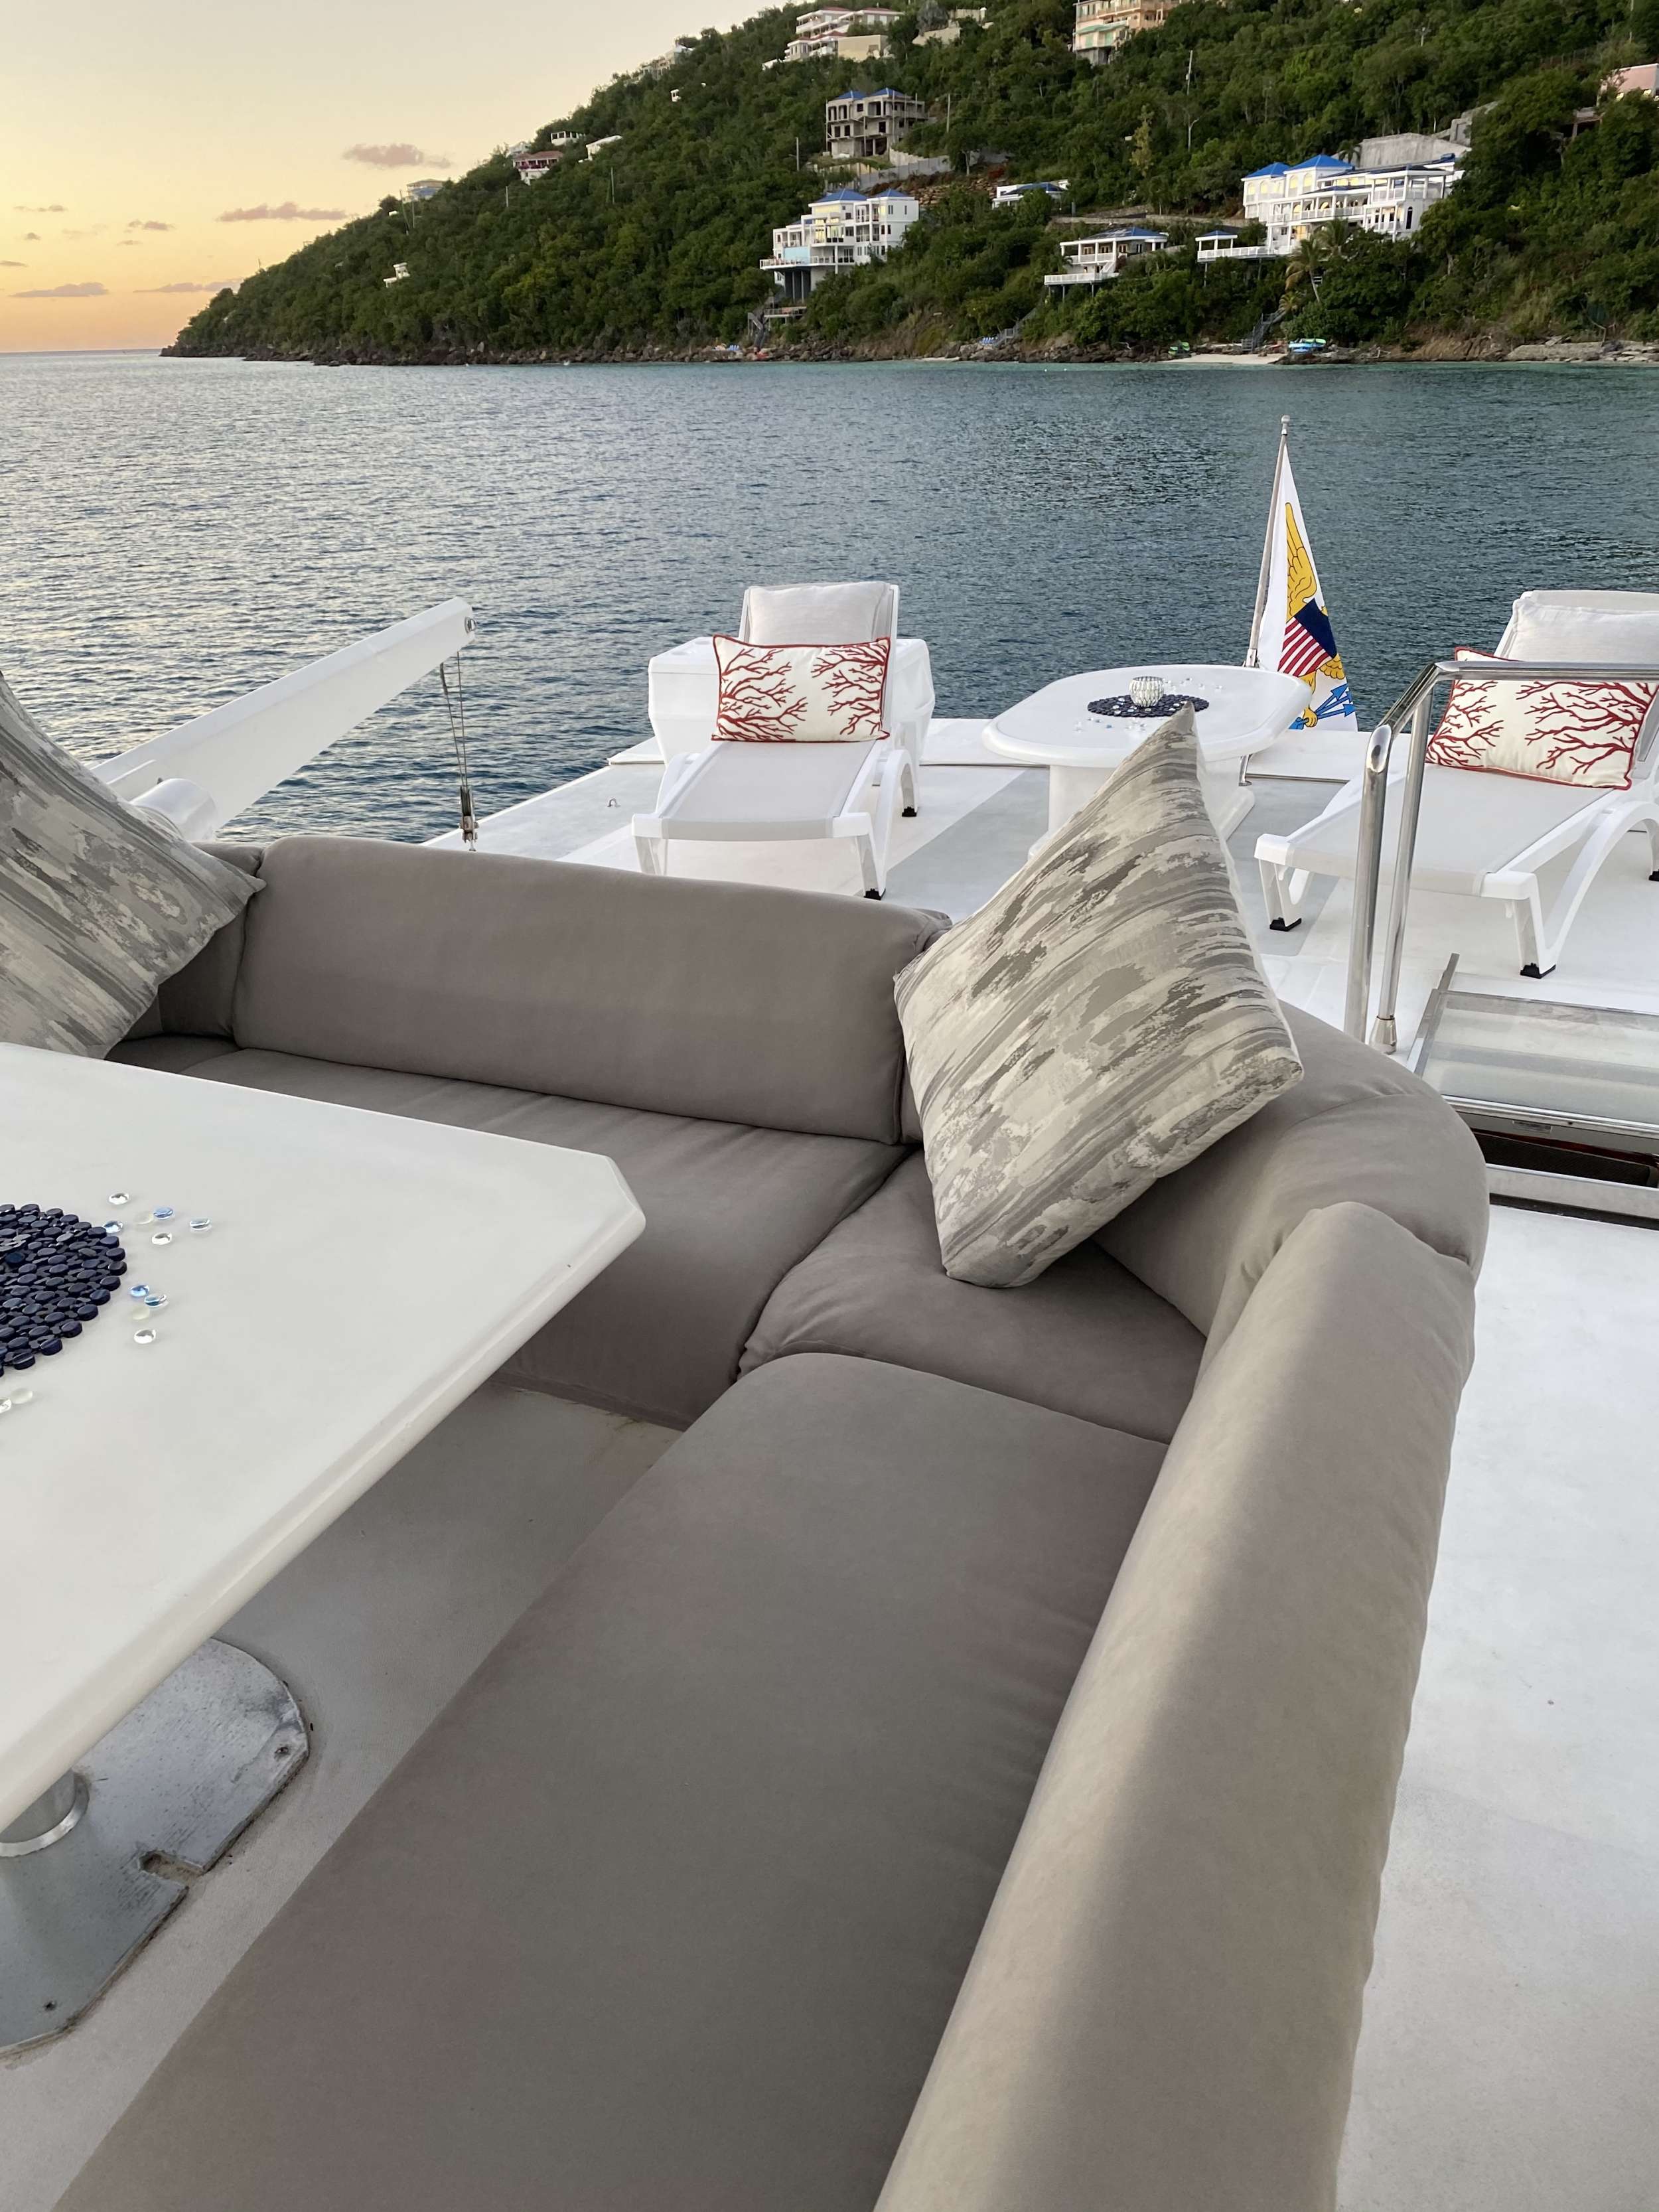 RUNAWAY - Superyacht charter British Virgin Island & Boat hire in Caribbean Virgin Islands 5